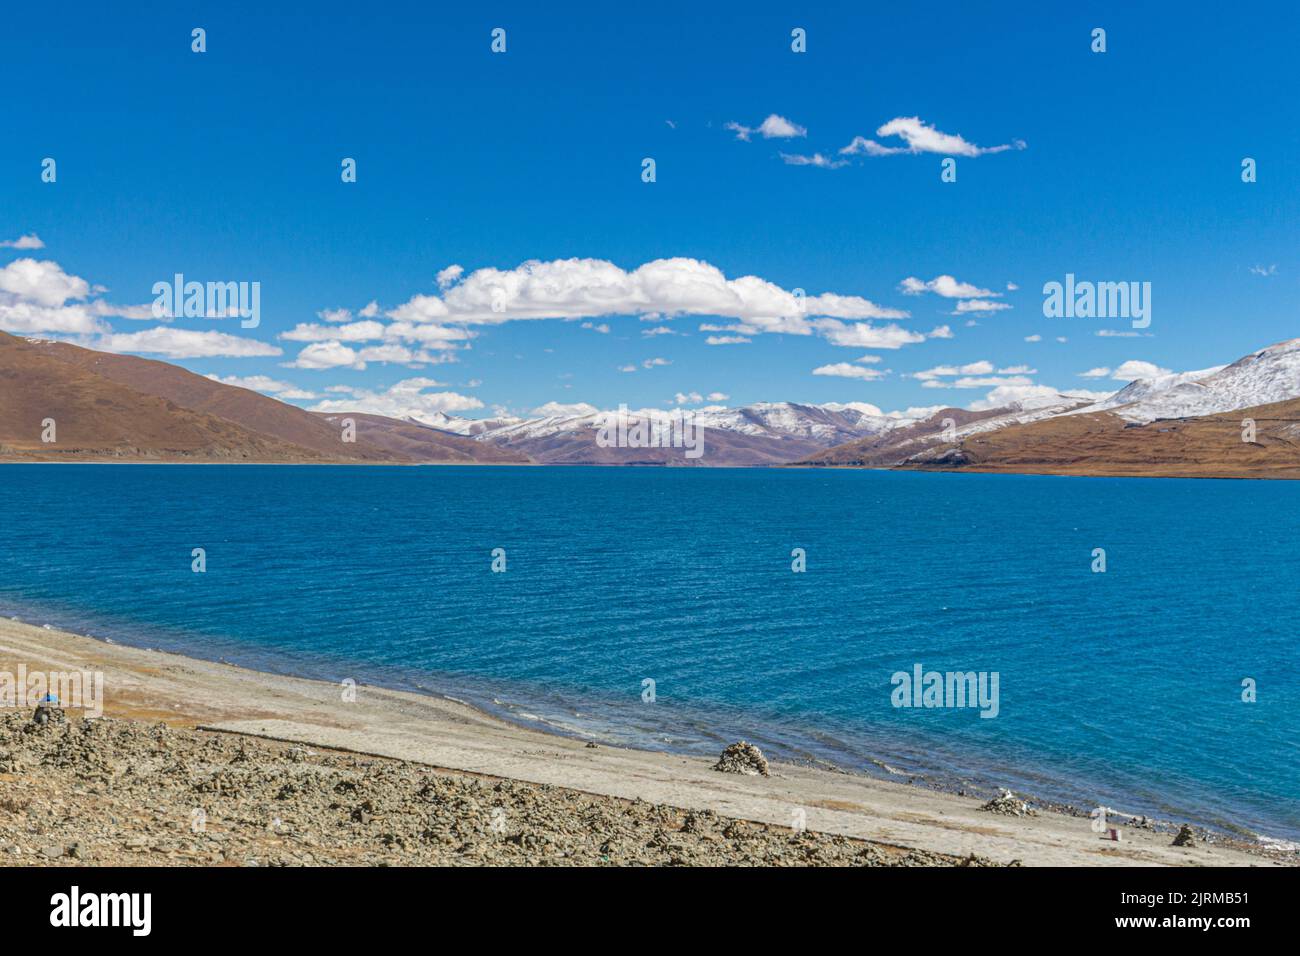 Yangzhuo Yongcuo lake also known as slender west lake is close to Lhasa, Tibet, China - image taken on the Tibetan Friendship Highway. Stock Photo